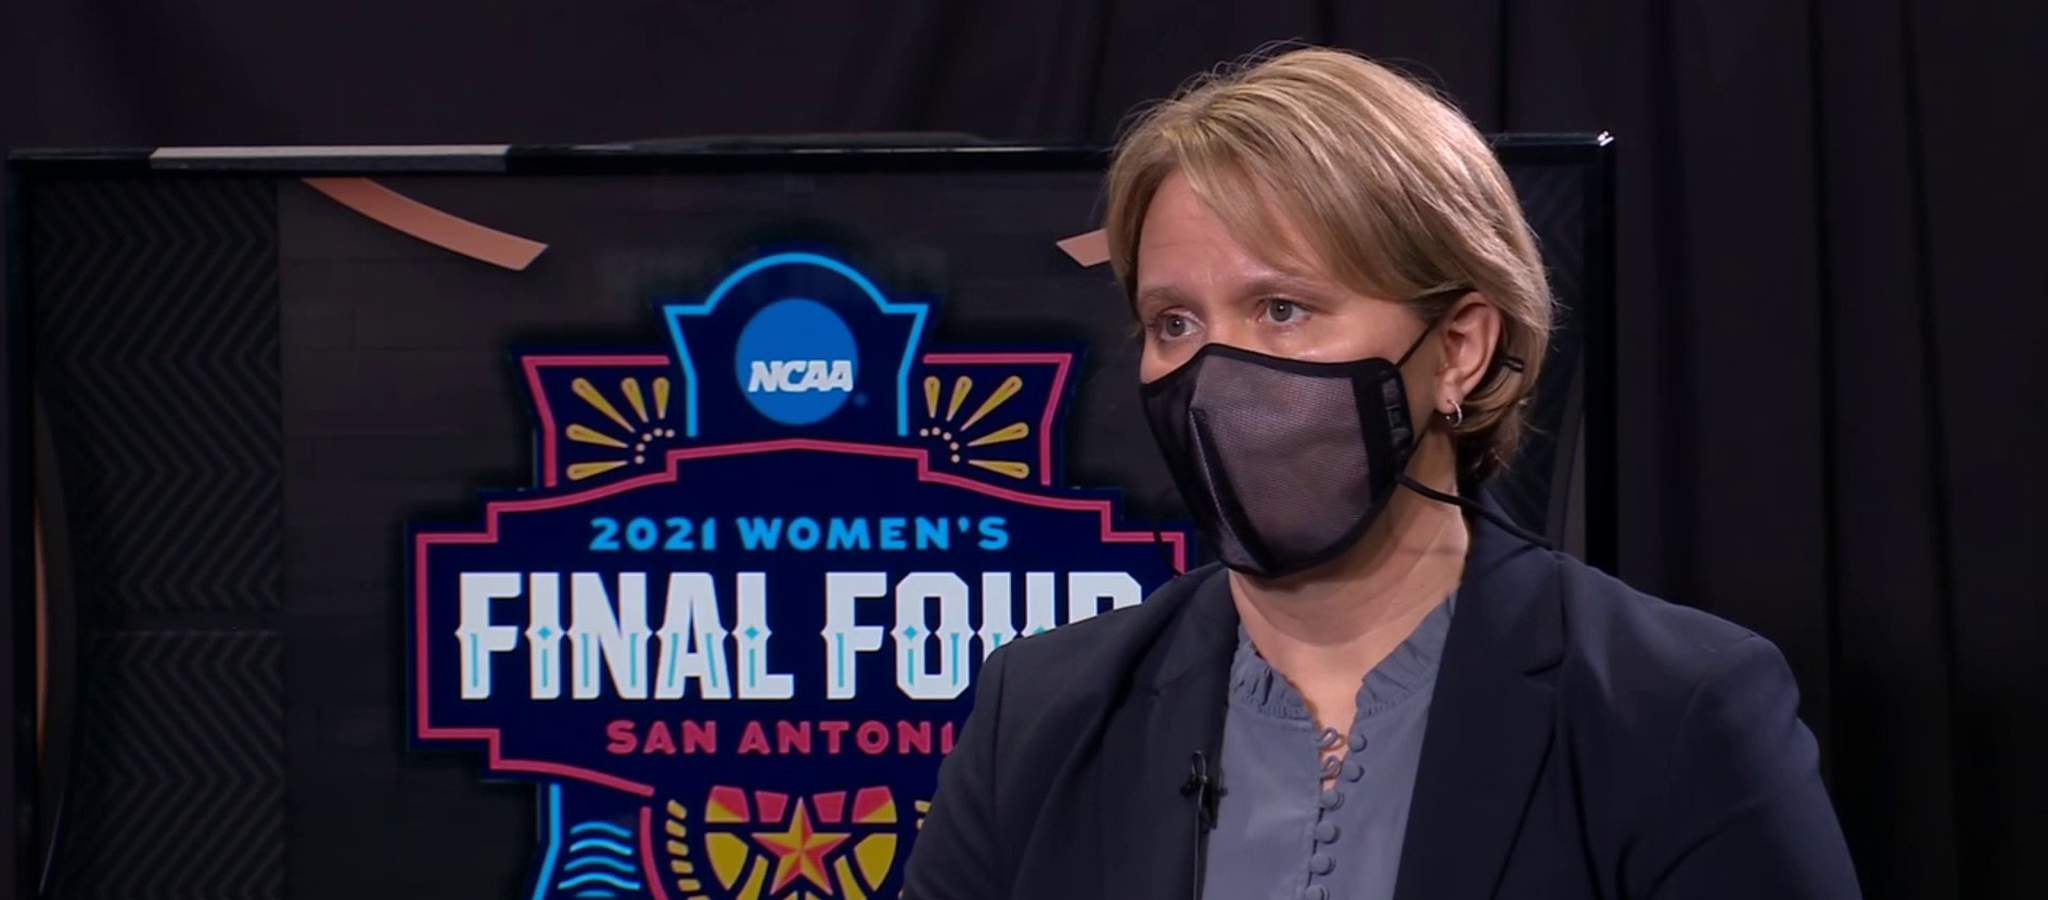 NCAA executive tells ESPN that tournament gender equity shortcomings were not San Antonio’s fault